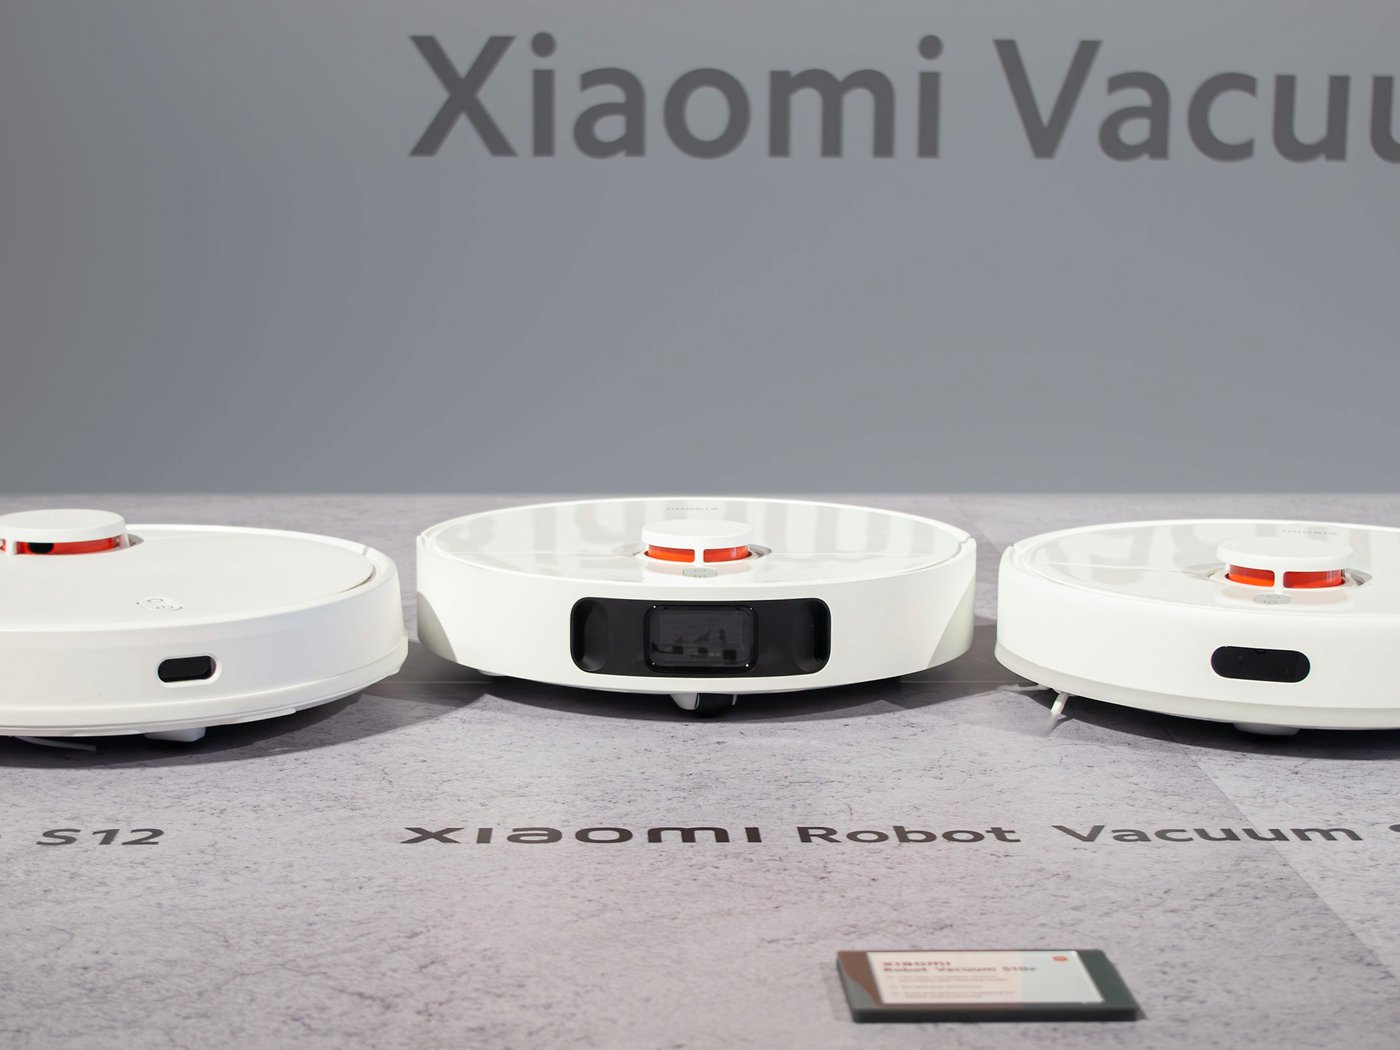 Xiaomi Robot Vacuum S12 